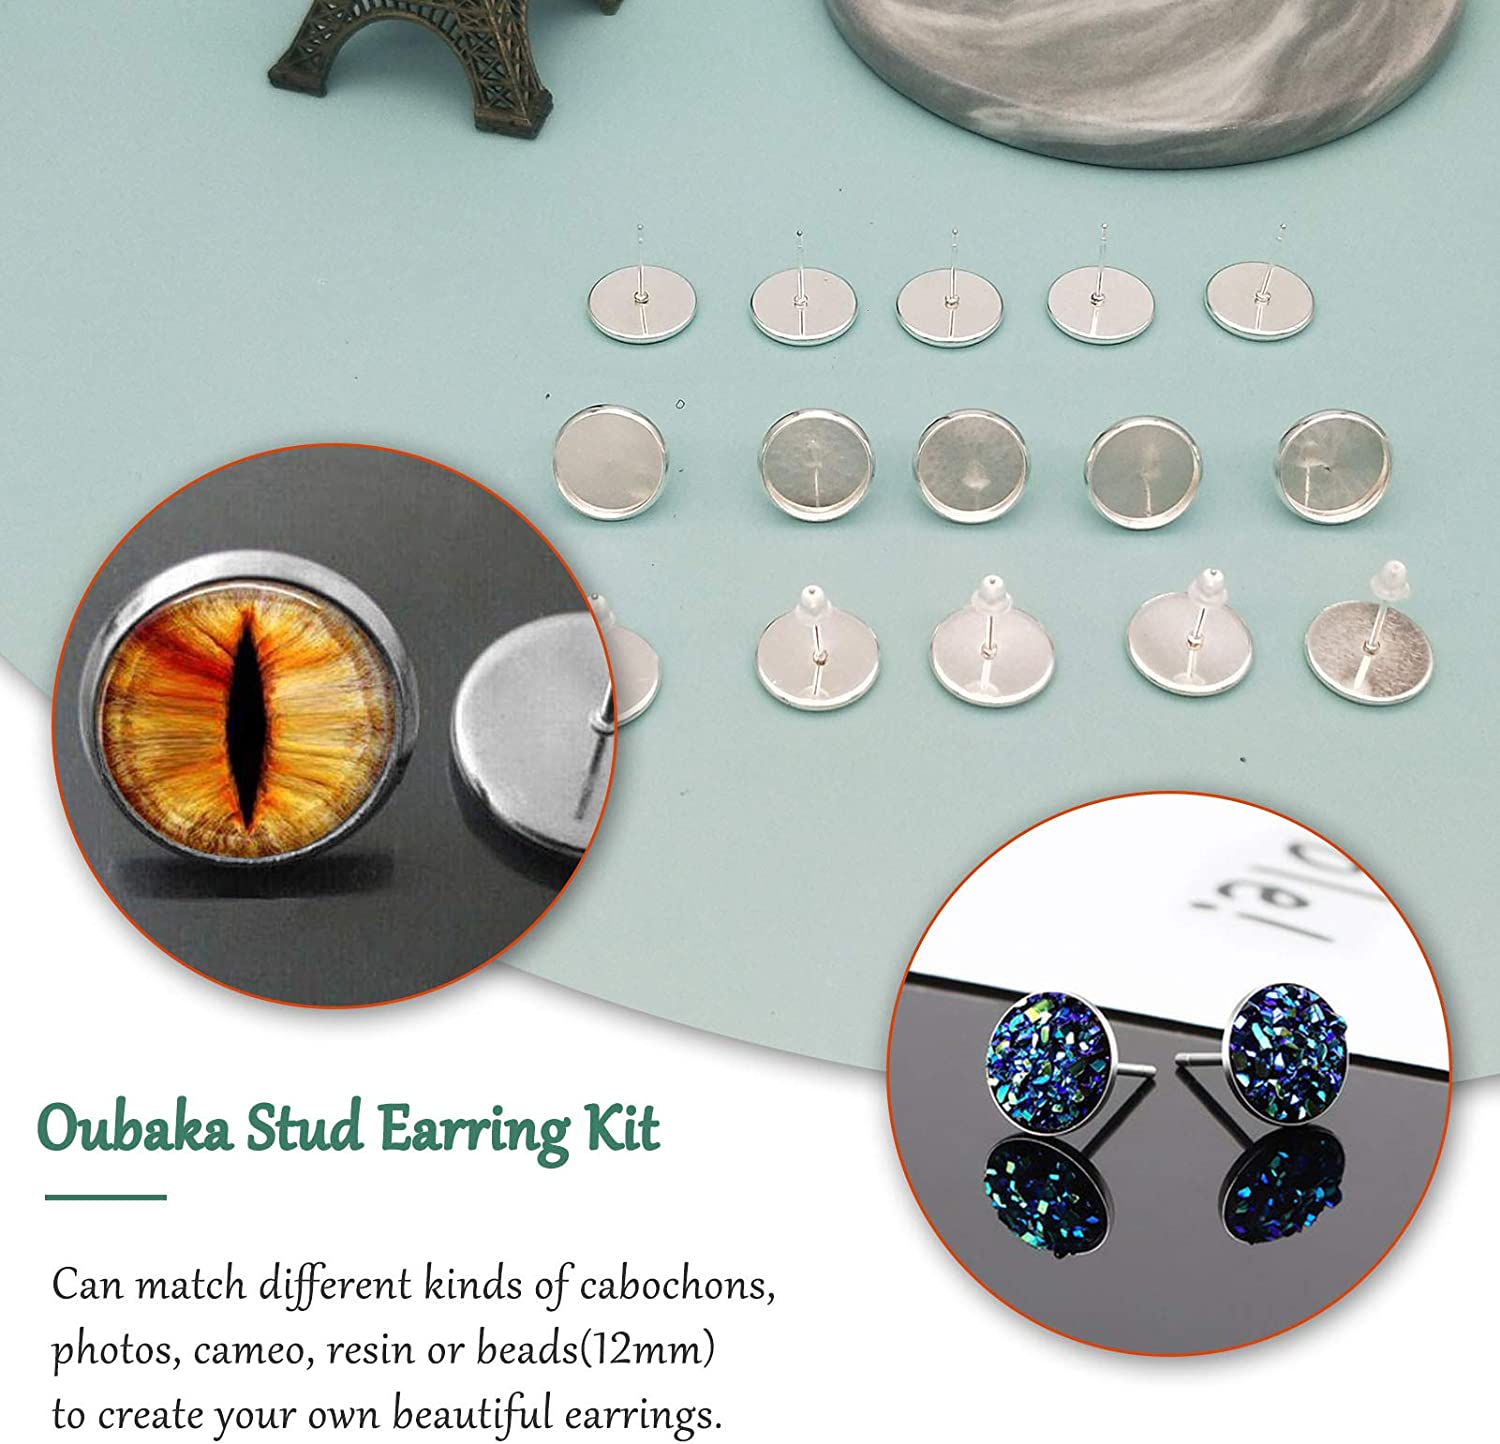 Blank Stud Earring Bezel Silver,200Pcs Stud Earring Kit Includes 100Pcs Cup Post Earrings and 100Pcs Rubber Earring Backs for DIY Jewelry Findings,Earring Making Supplies - image 3 of 5